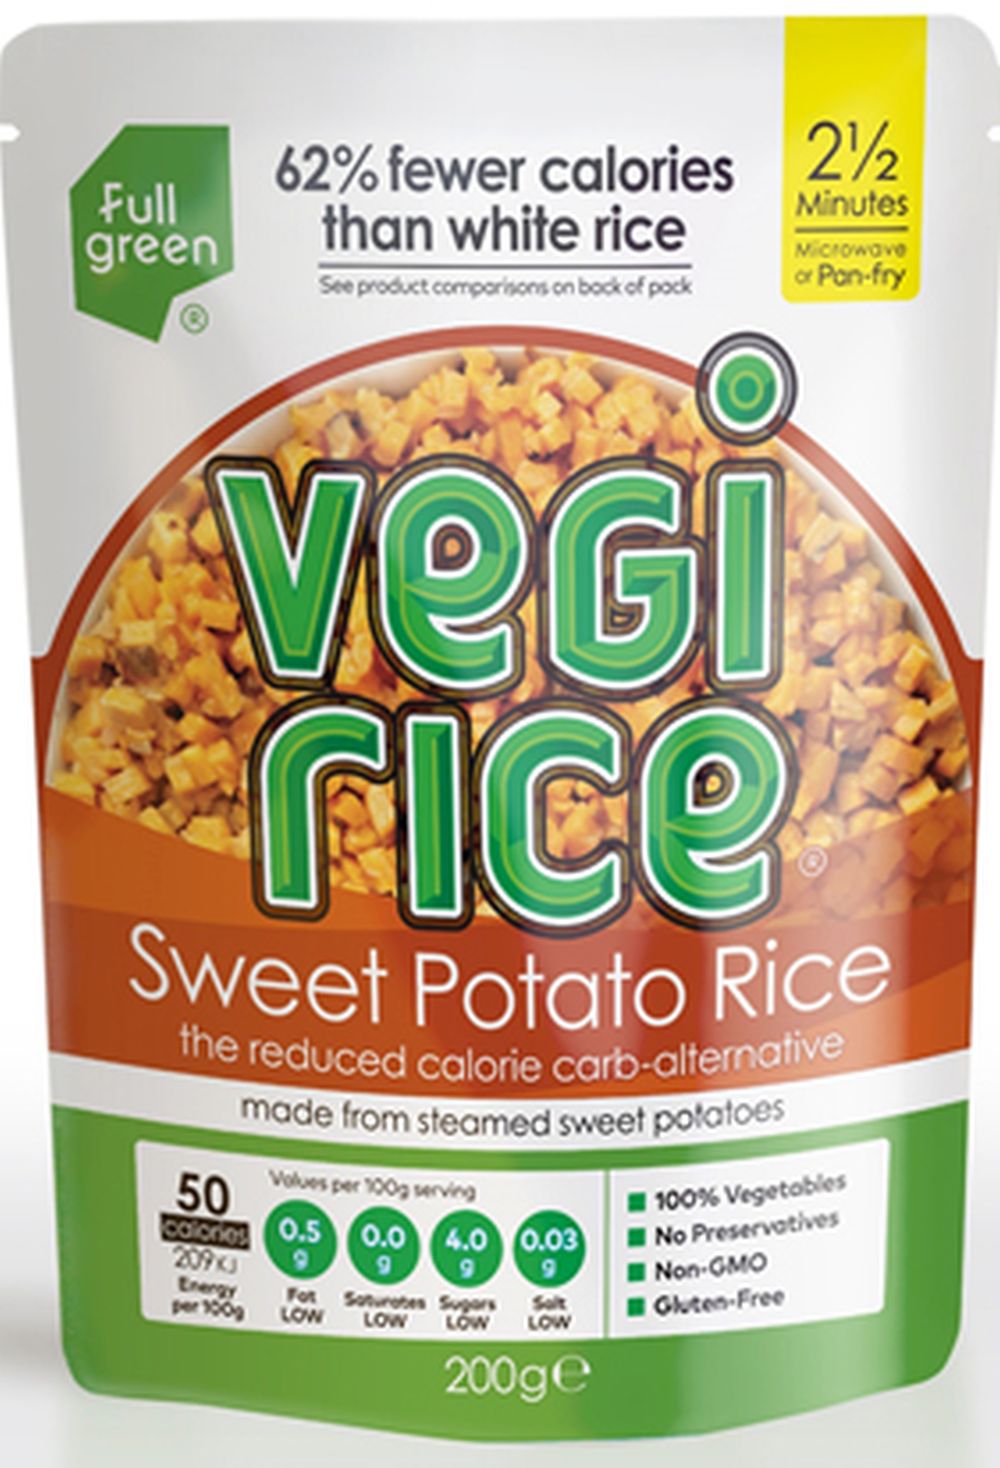 VegiRice Sweet Potato Rice 200g (Fullgreen ...